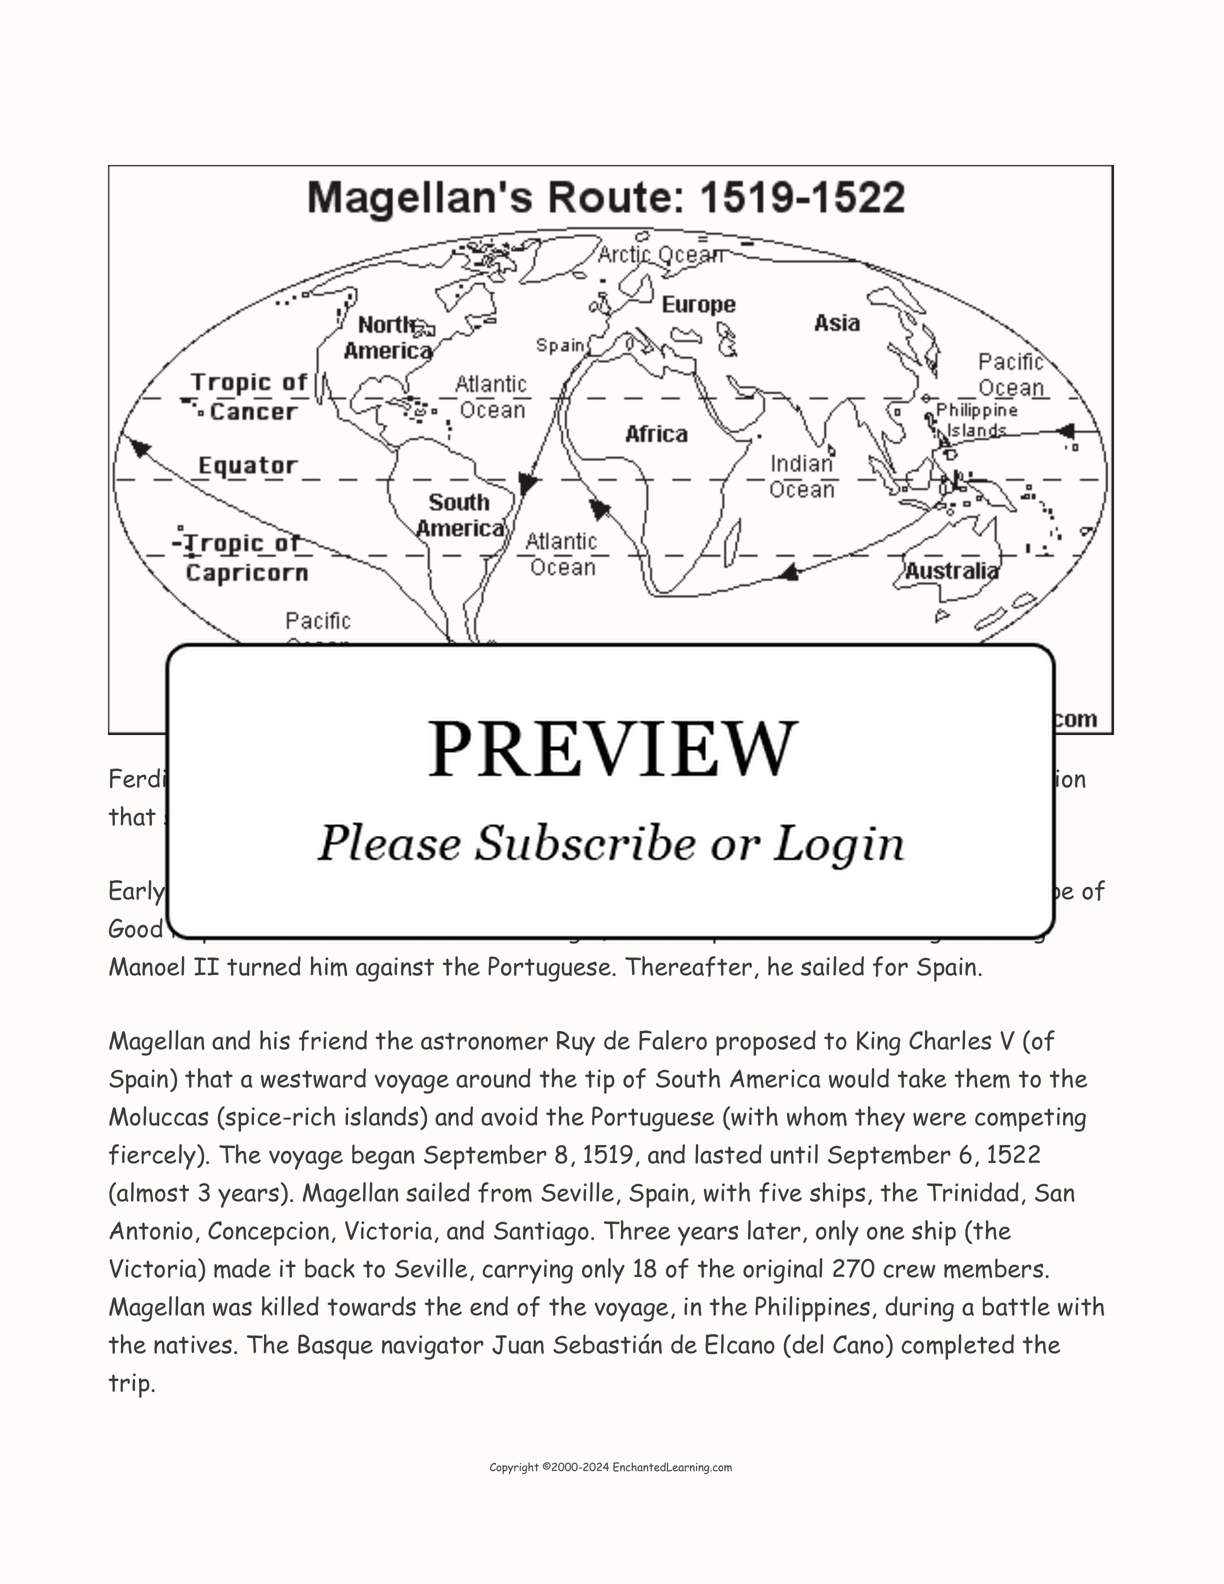 Ferdinand Magellan interactive printout page 1